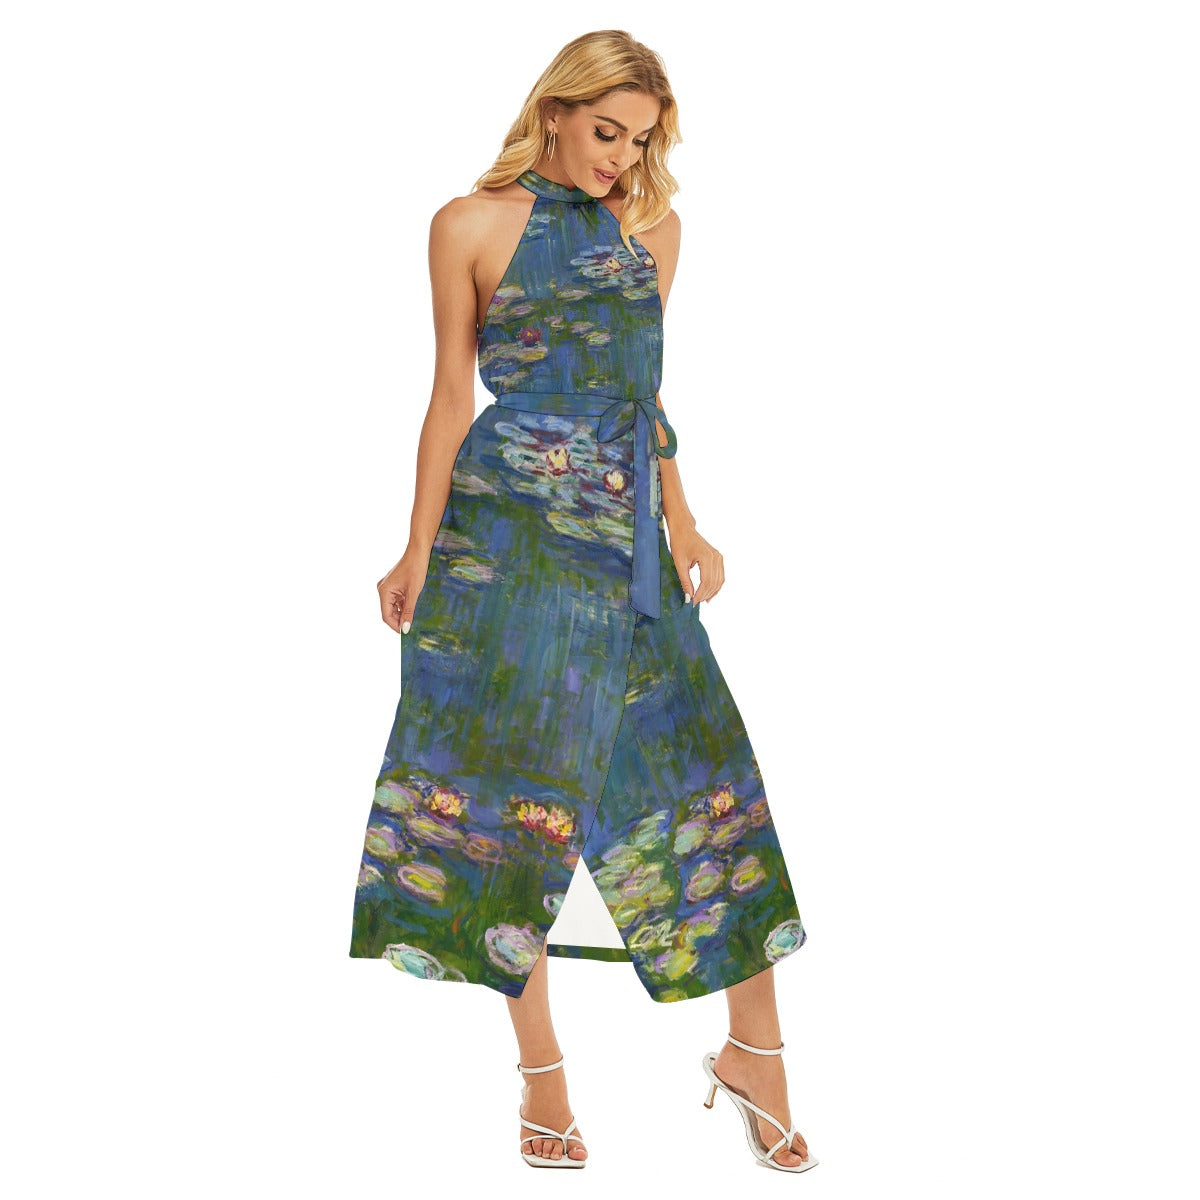 Claude Monet Fashion - Artistic Women's Clothing